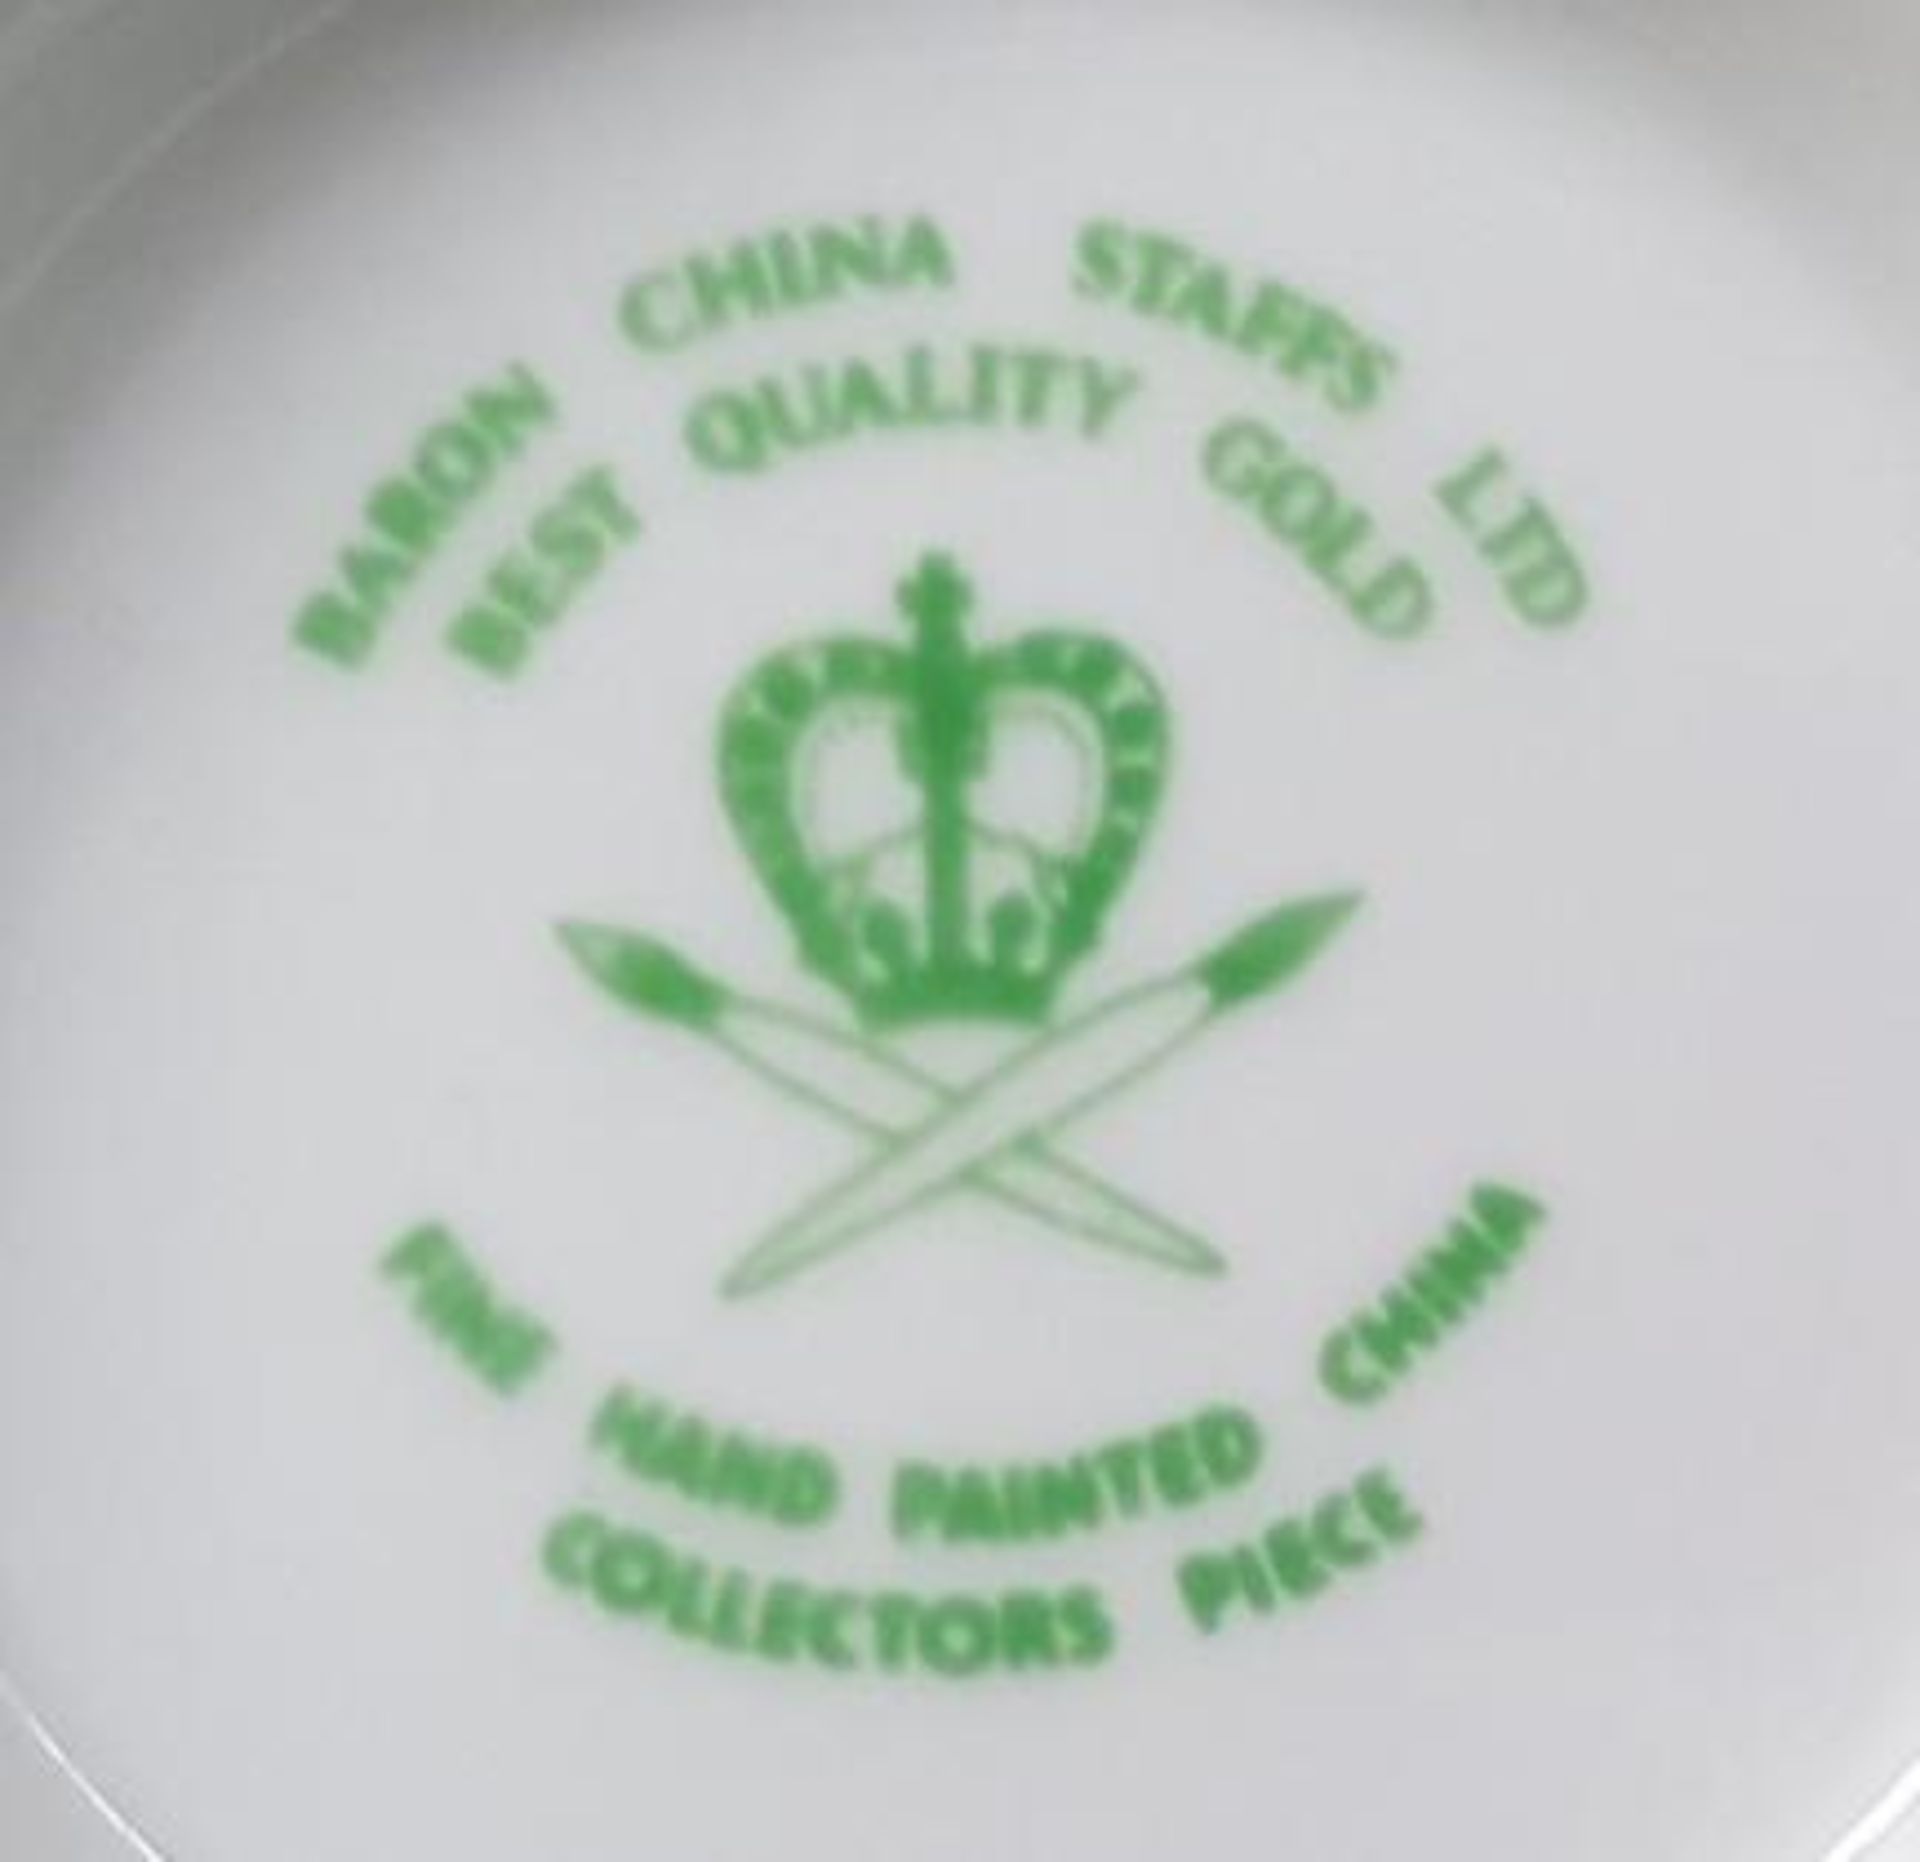 6 x Set Of Baron China Staffs LTD Mugs With Fruit Design - Ref CQ369 E - CL334 - Location: Altrincha - Image 3 of 5